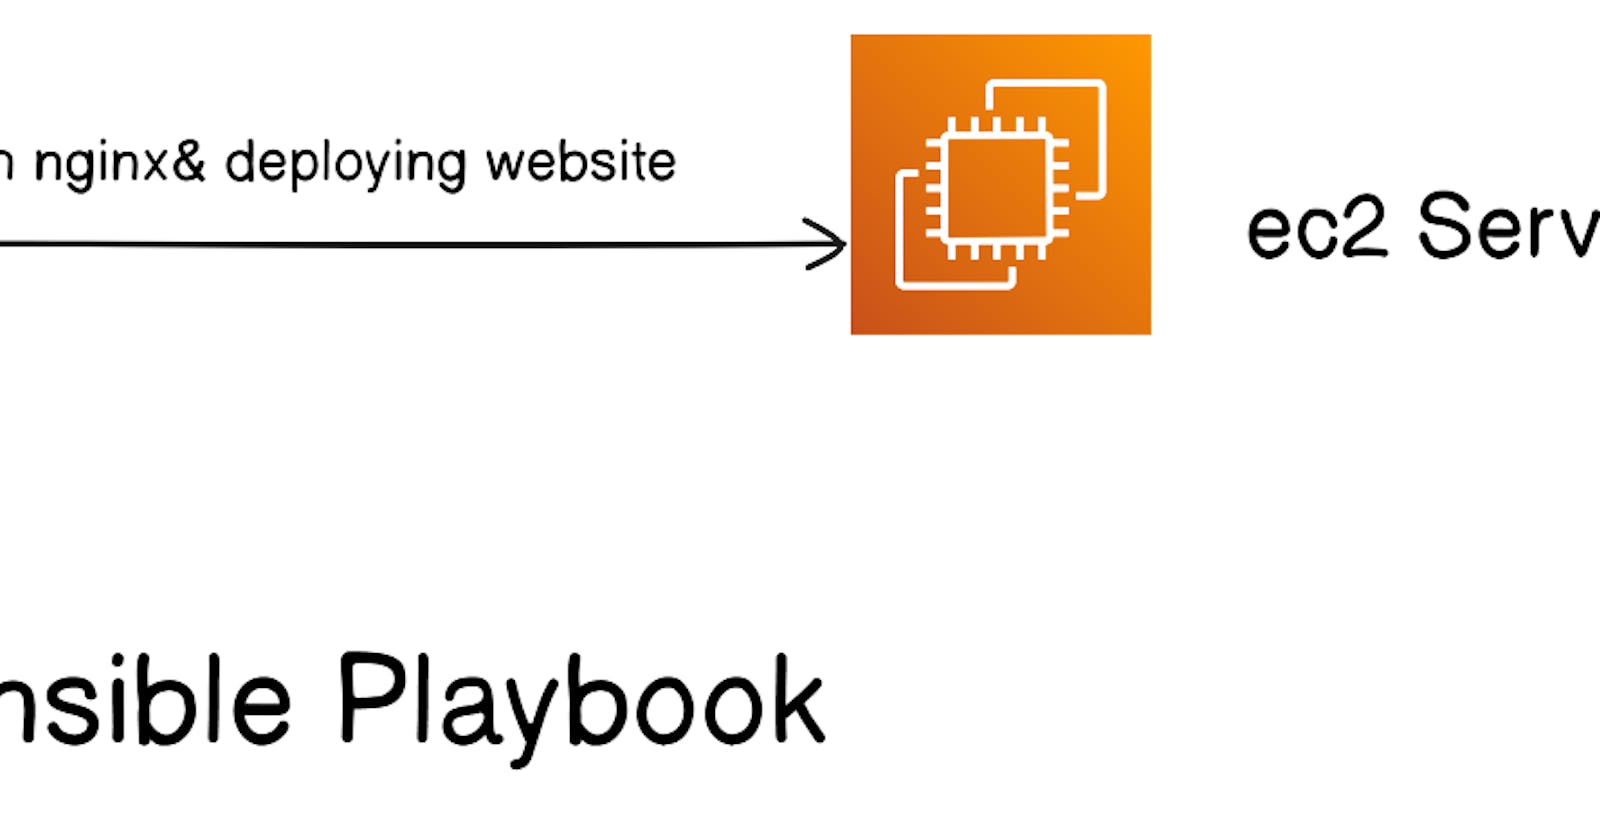 Deploying static website on Nginx web server using ansible playbook.